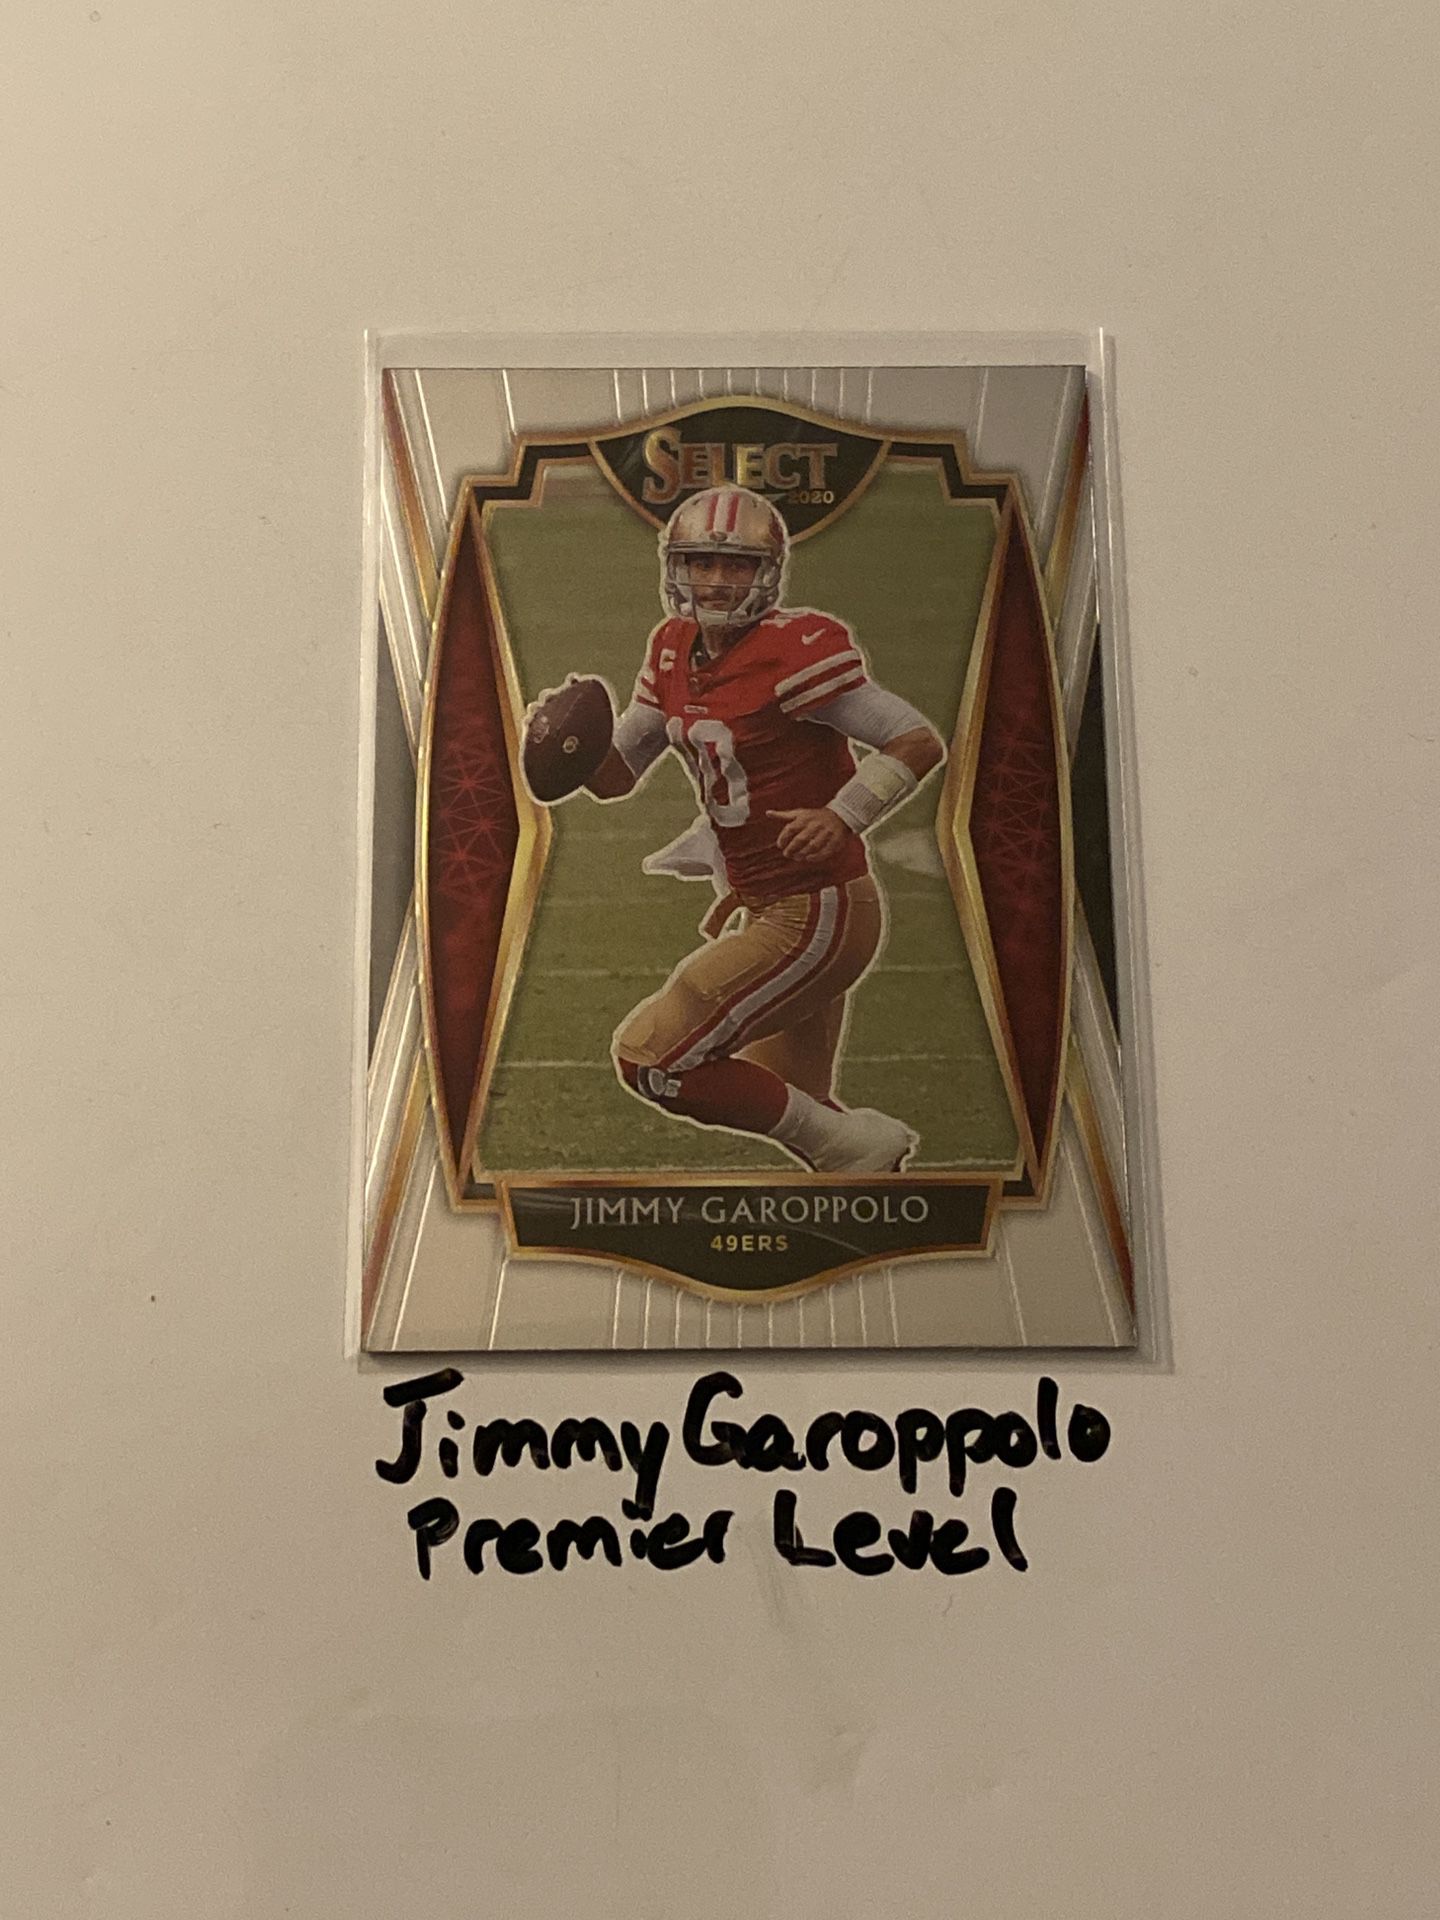 Jimmy Garoppolo San Francisco 49ers QB Short Print Premier Level Insert Card. 